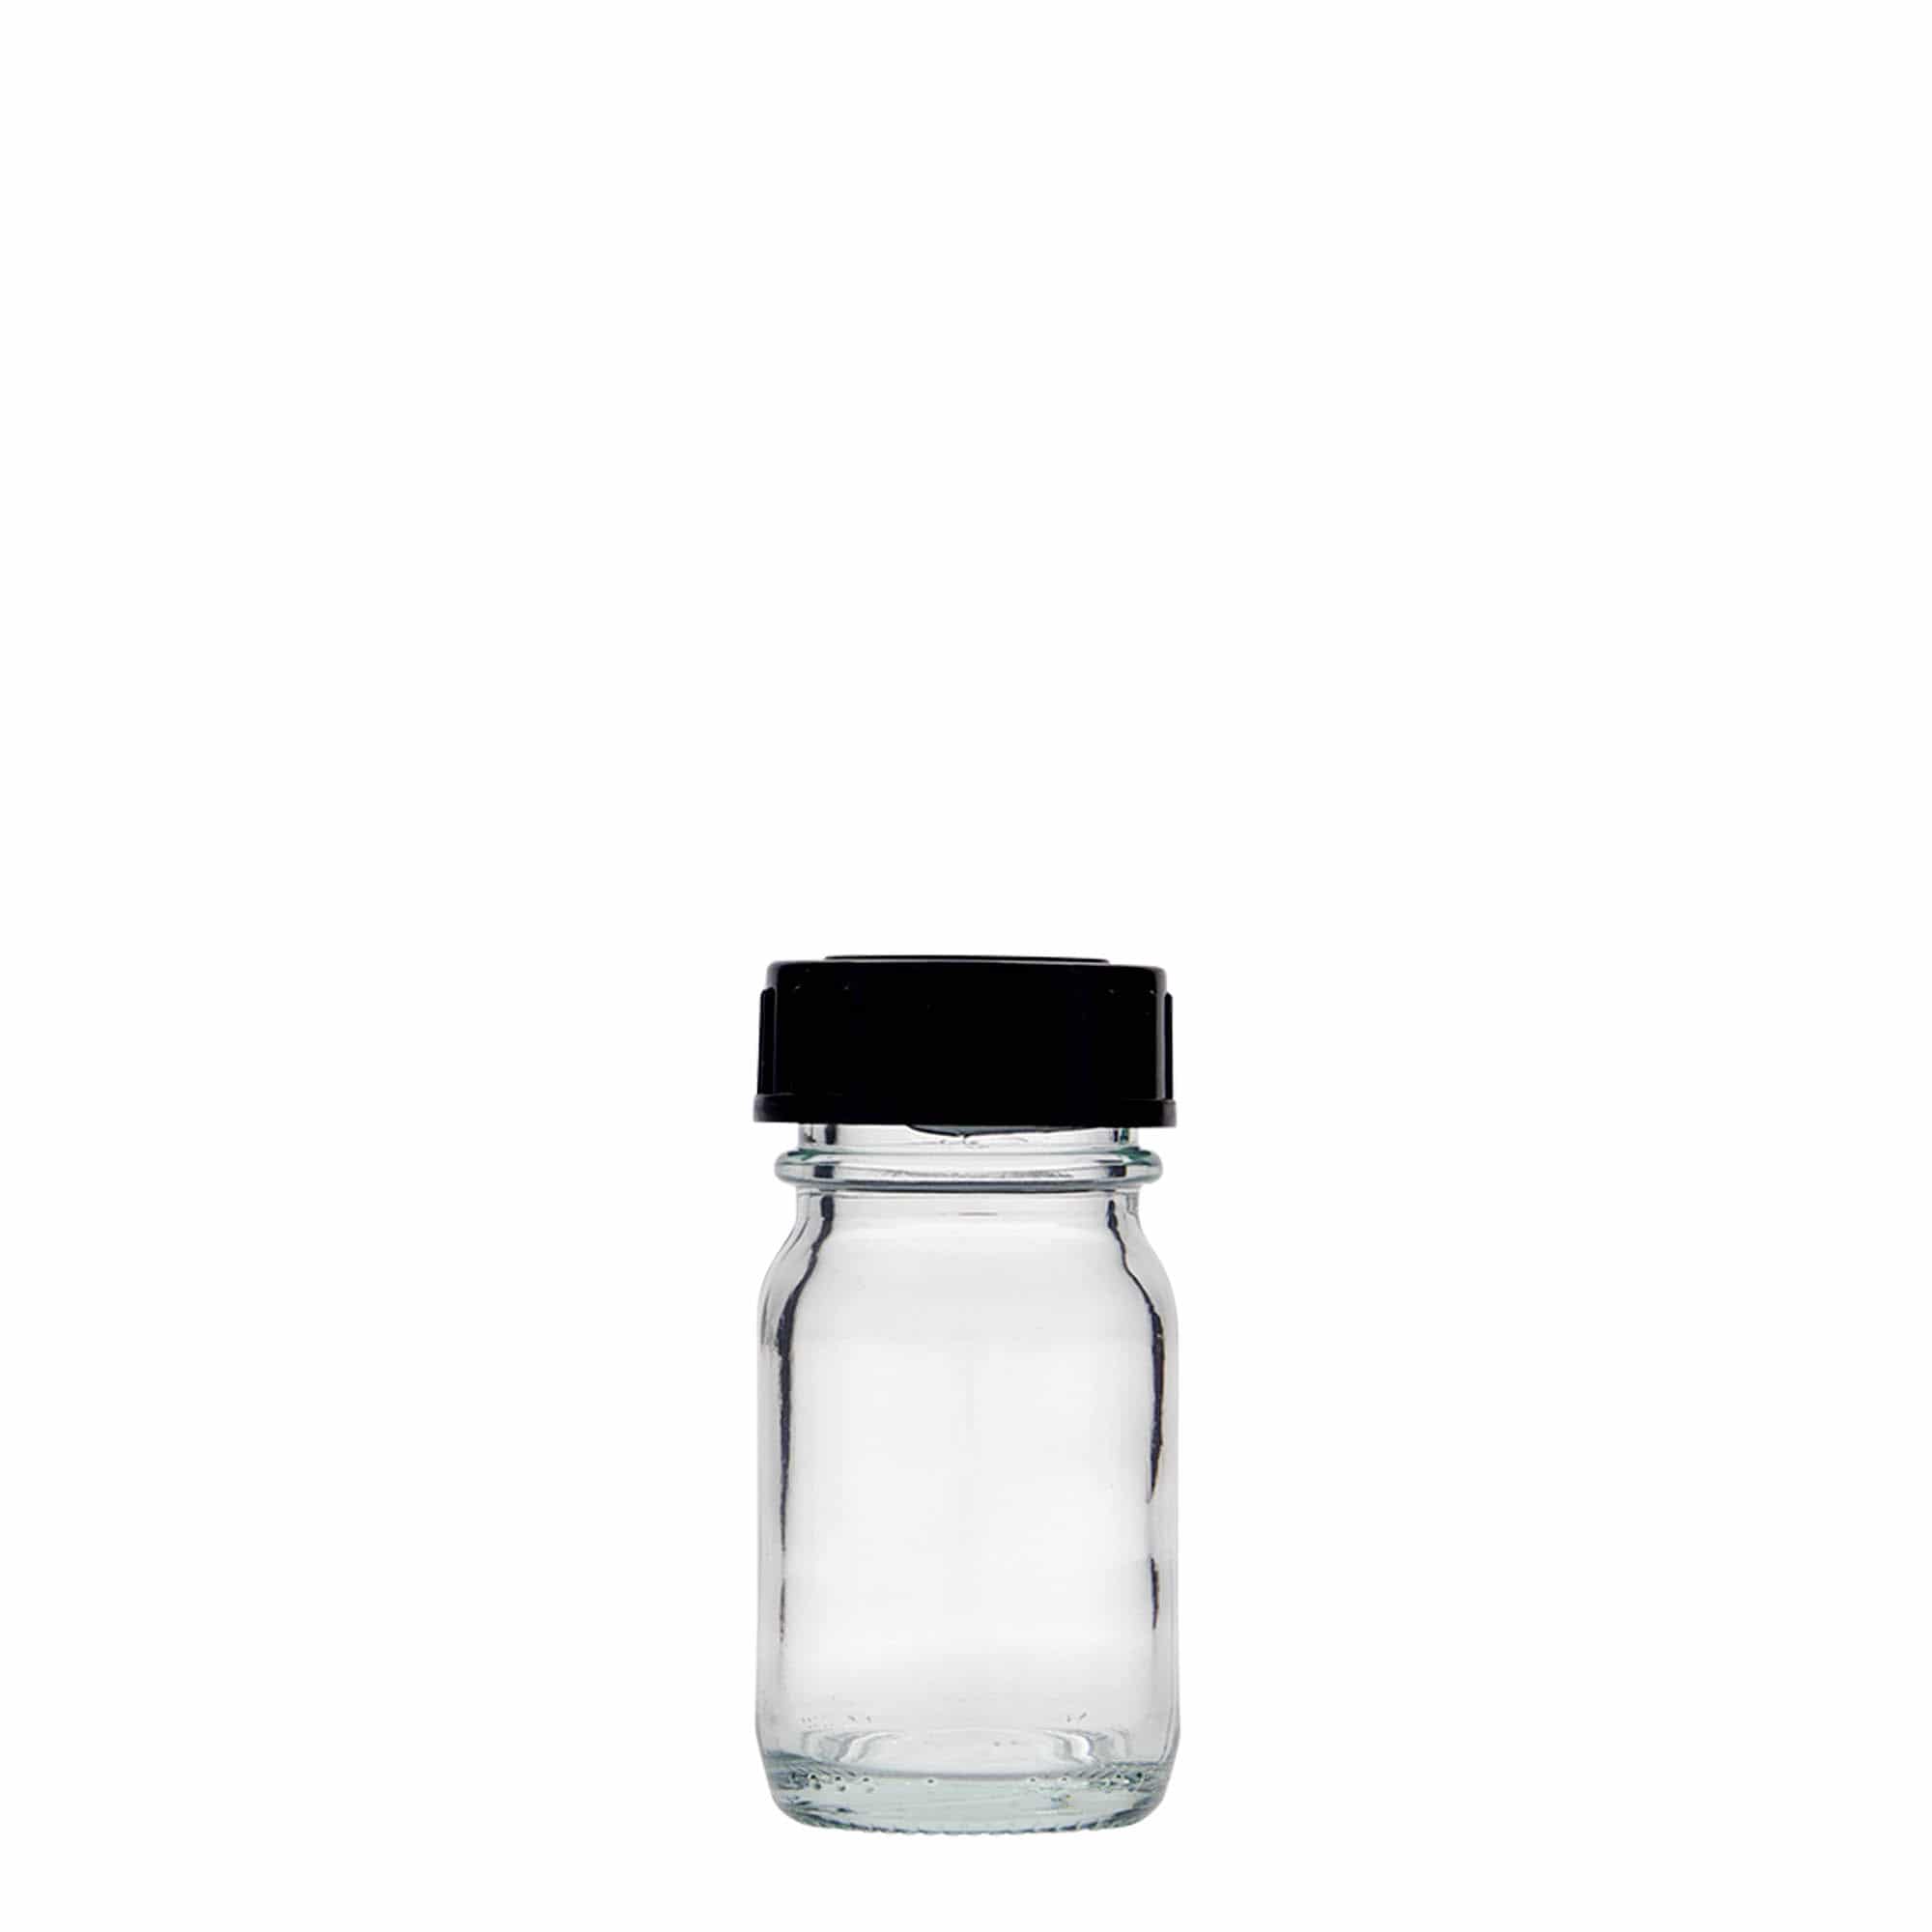 30 ml wide mouth jar, closure: DIN 32